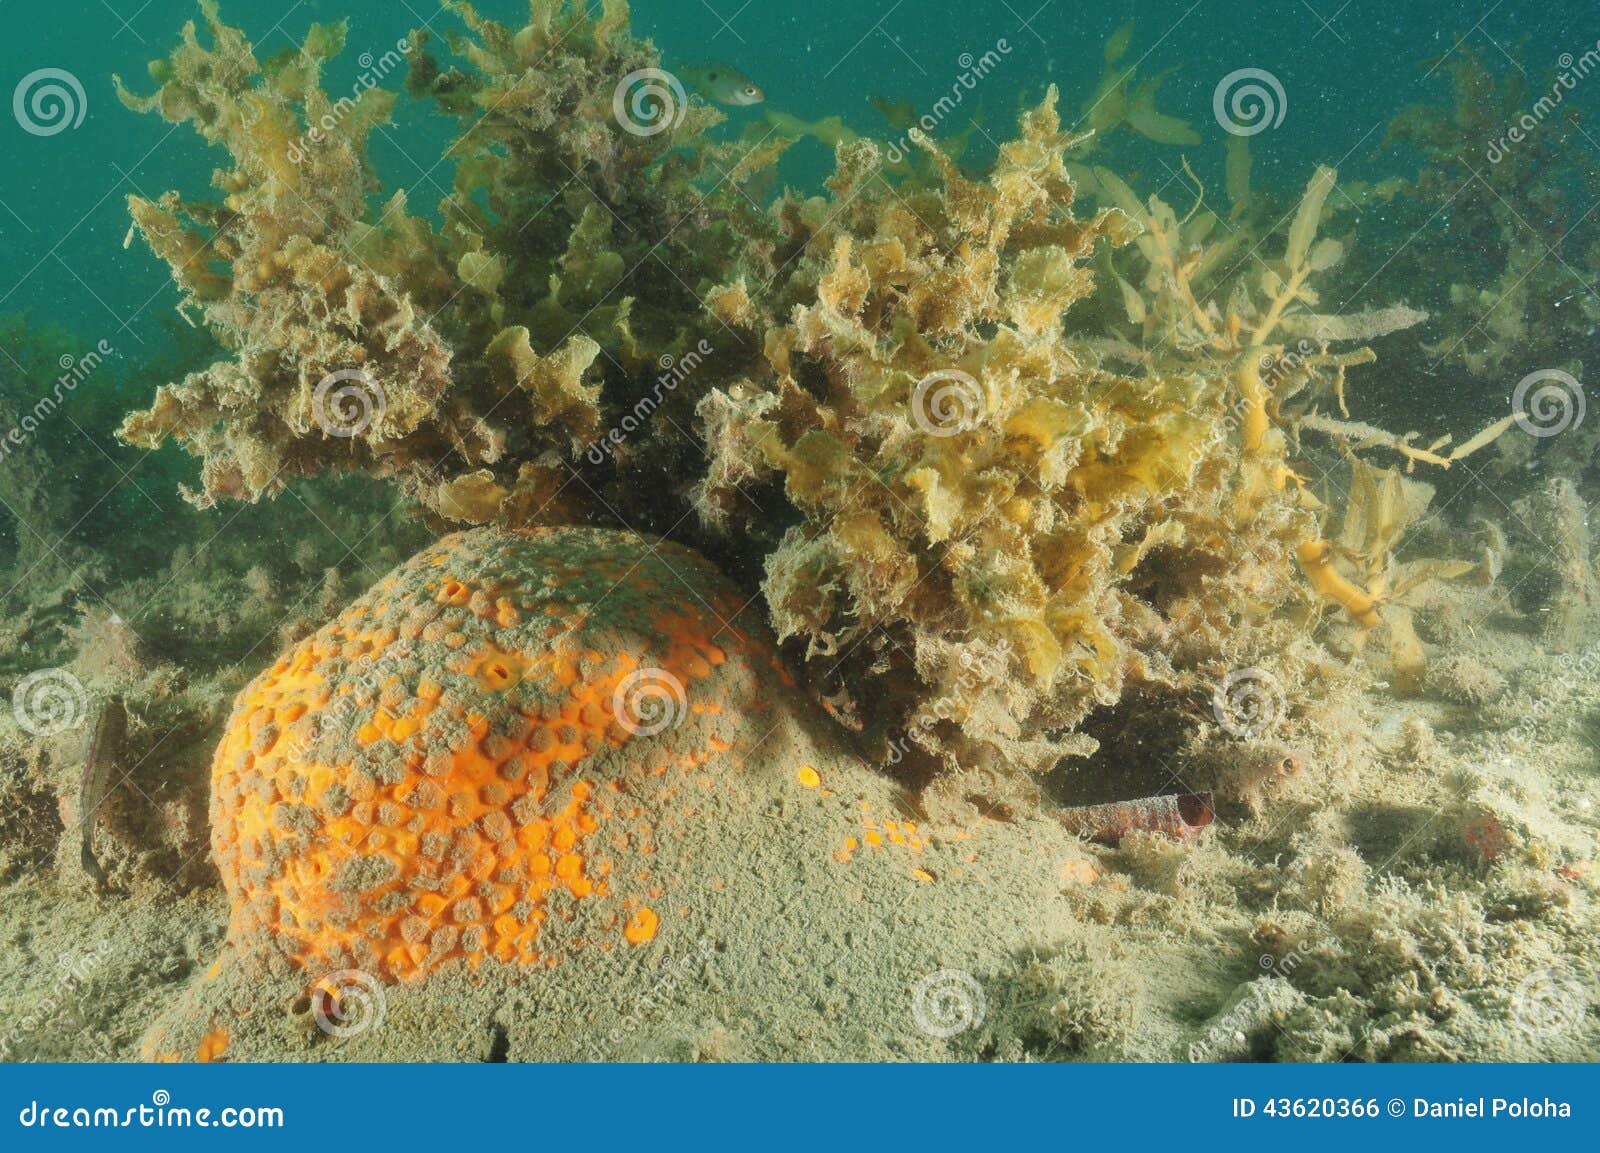 Boring sponge stock photo. Image of porifera, algae, encrusted - 43620366